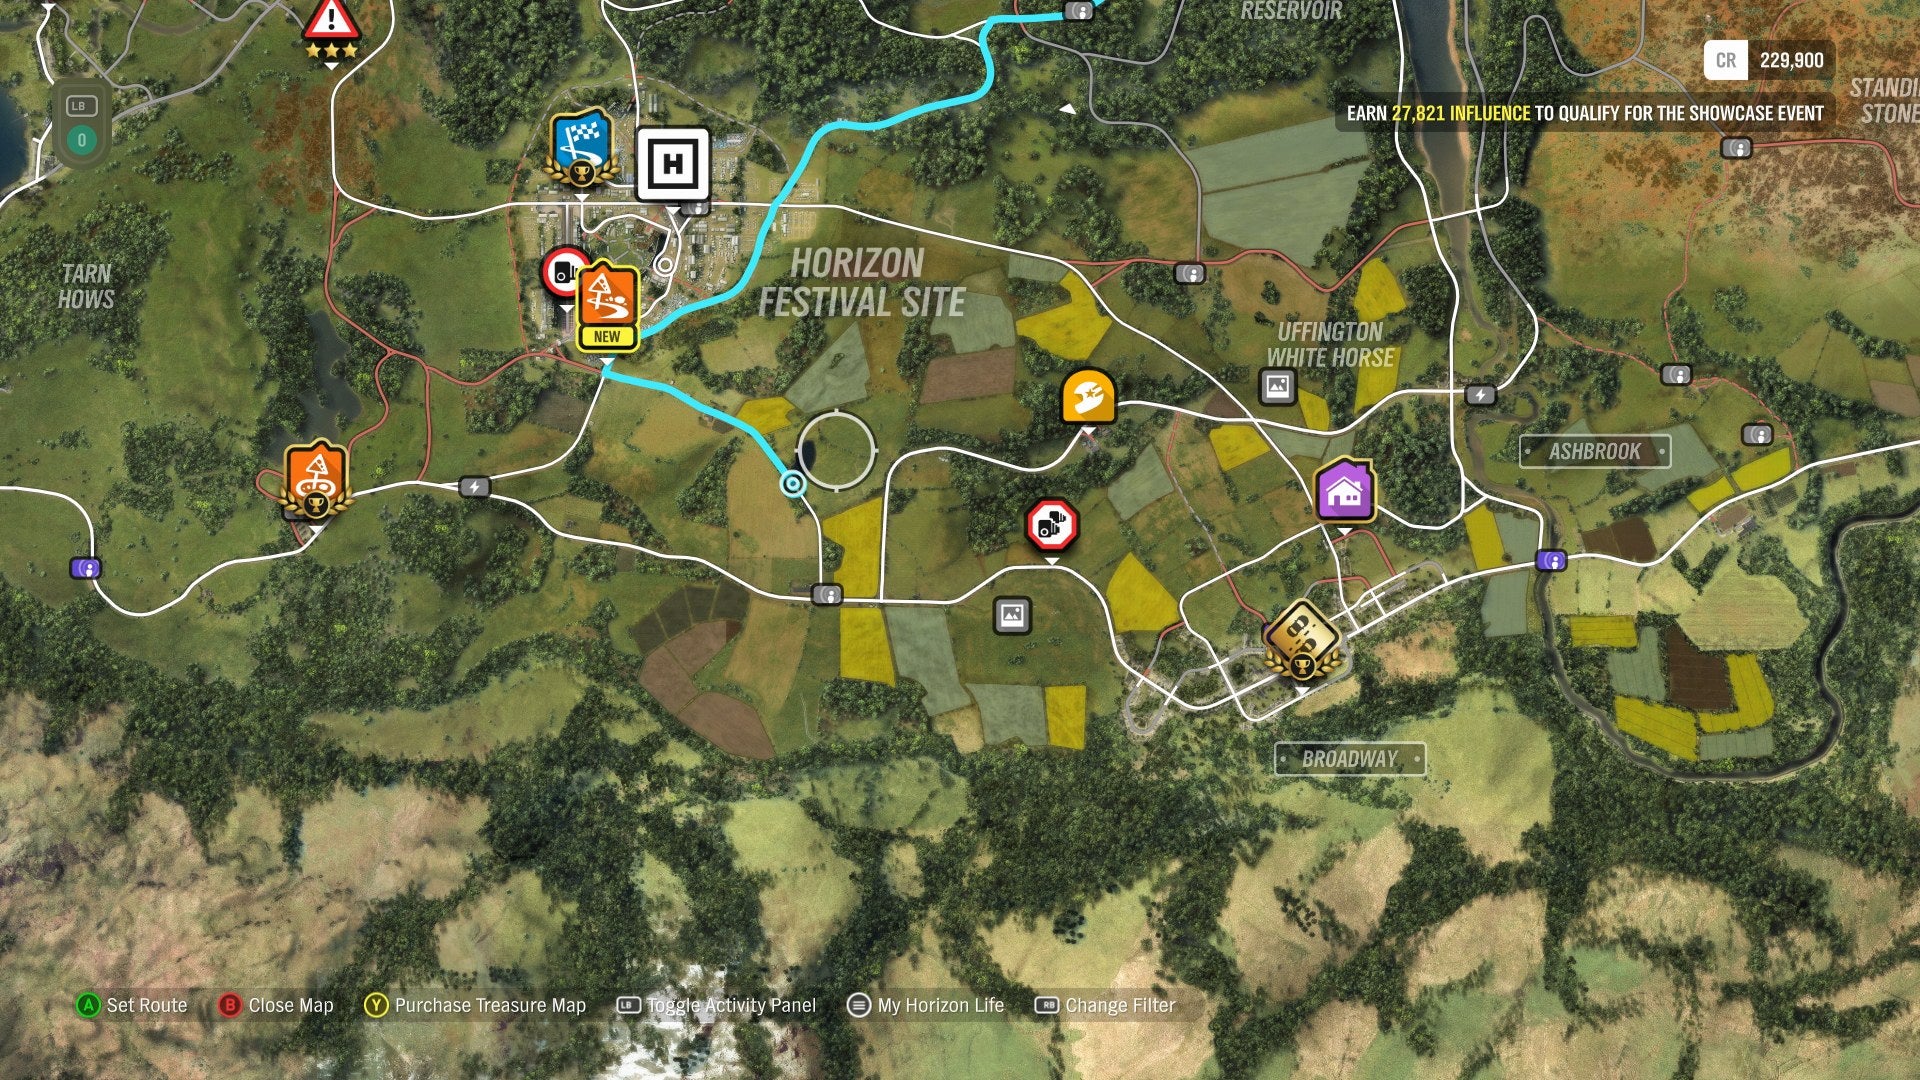 Forza Horizon 4 Finds, Locations - Find Every Horizon 4 Barn Location Plus Seasonal Barn | VG247